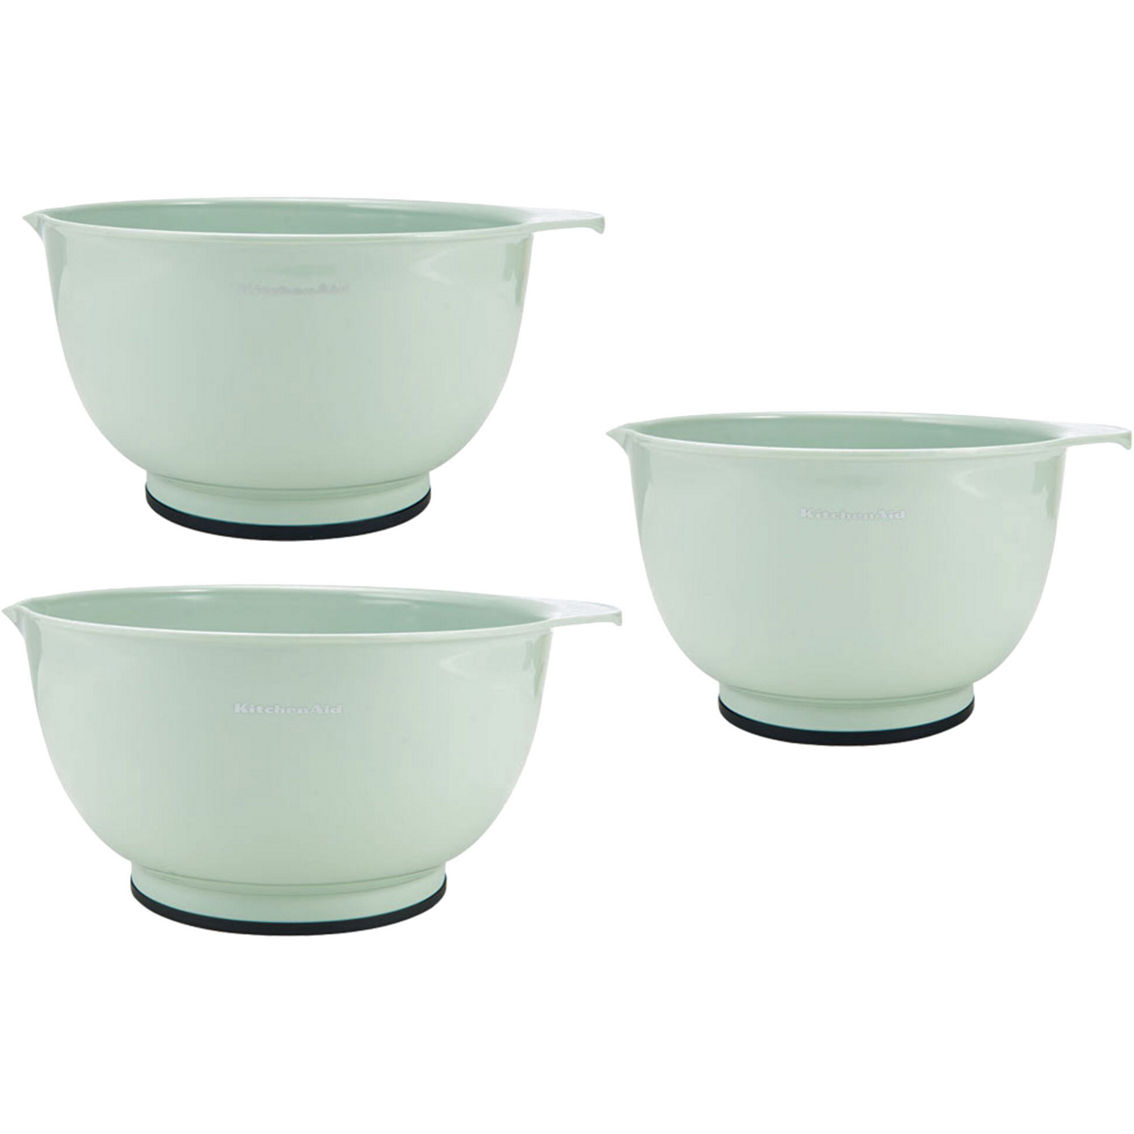 KitchenAid Mixing Bowls, Set of 3, Pistachio - Image 1 of 5